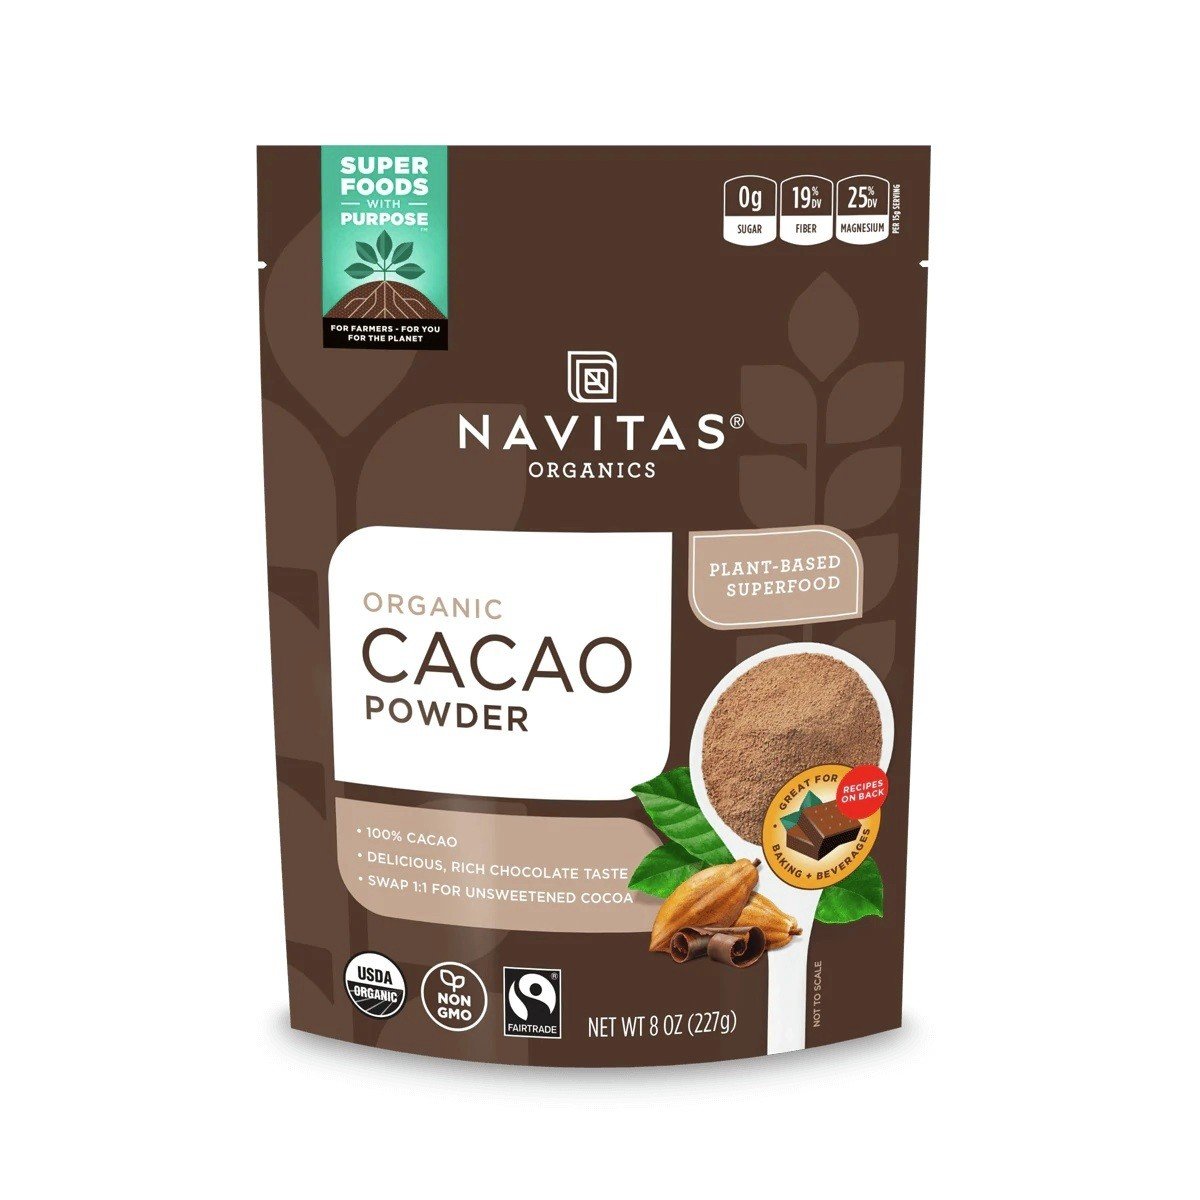 Navitas Cacao Powder Organic 8 oz Powder